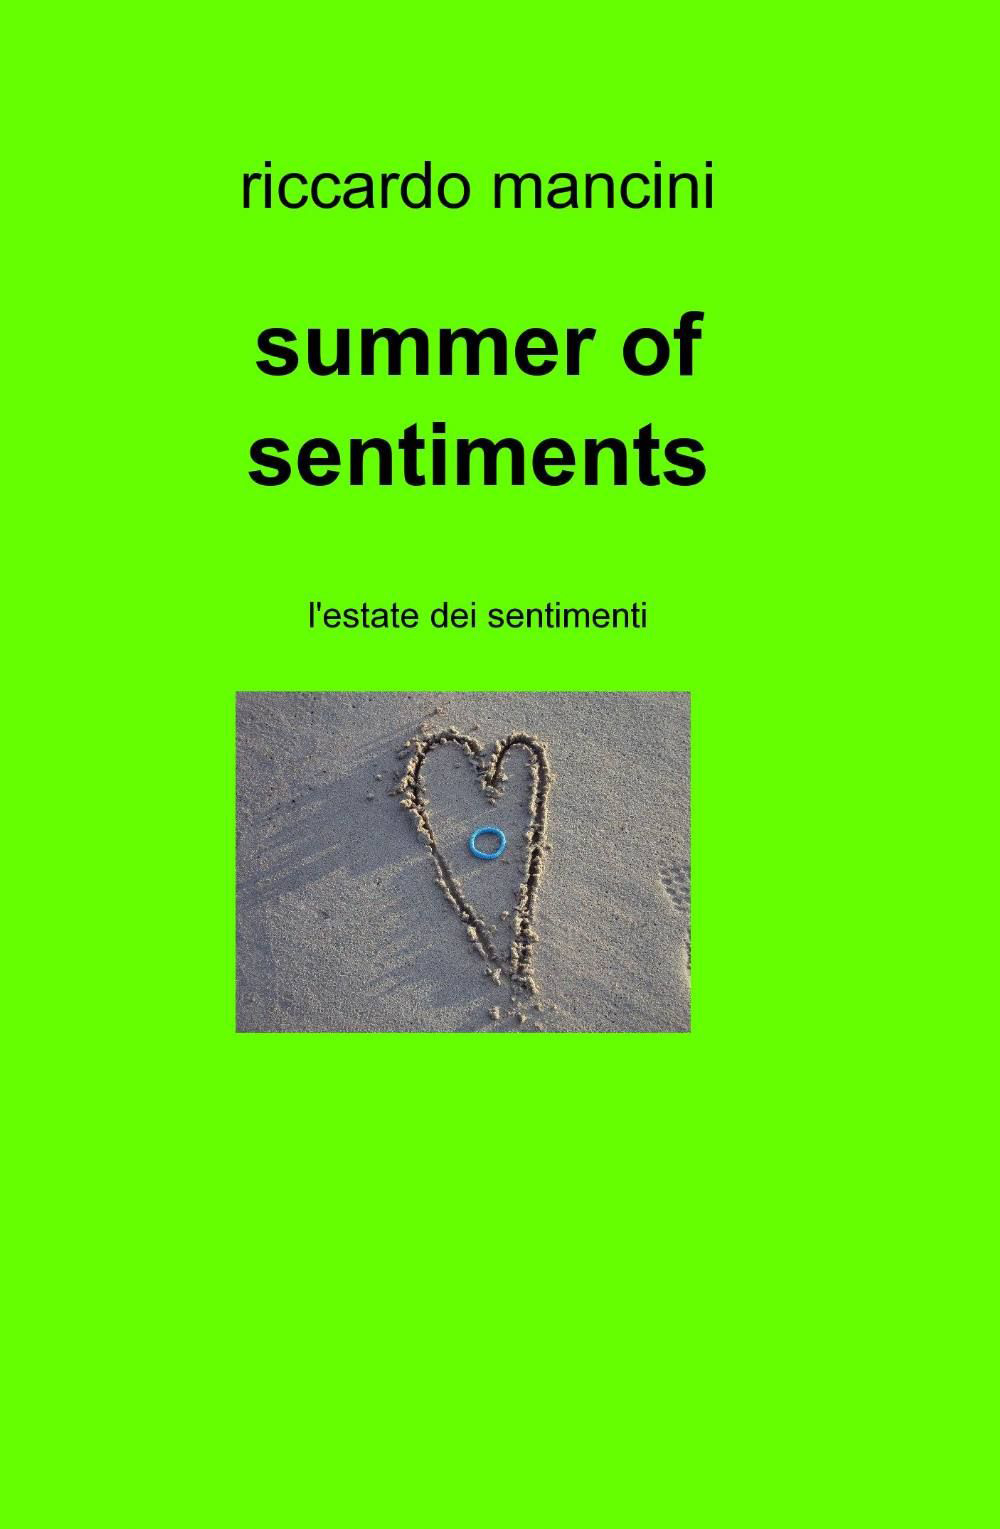 Summer of sentiments